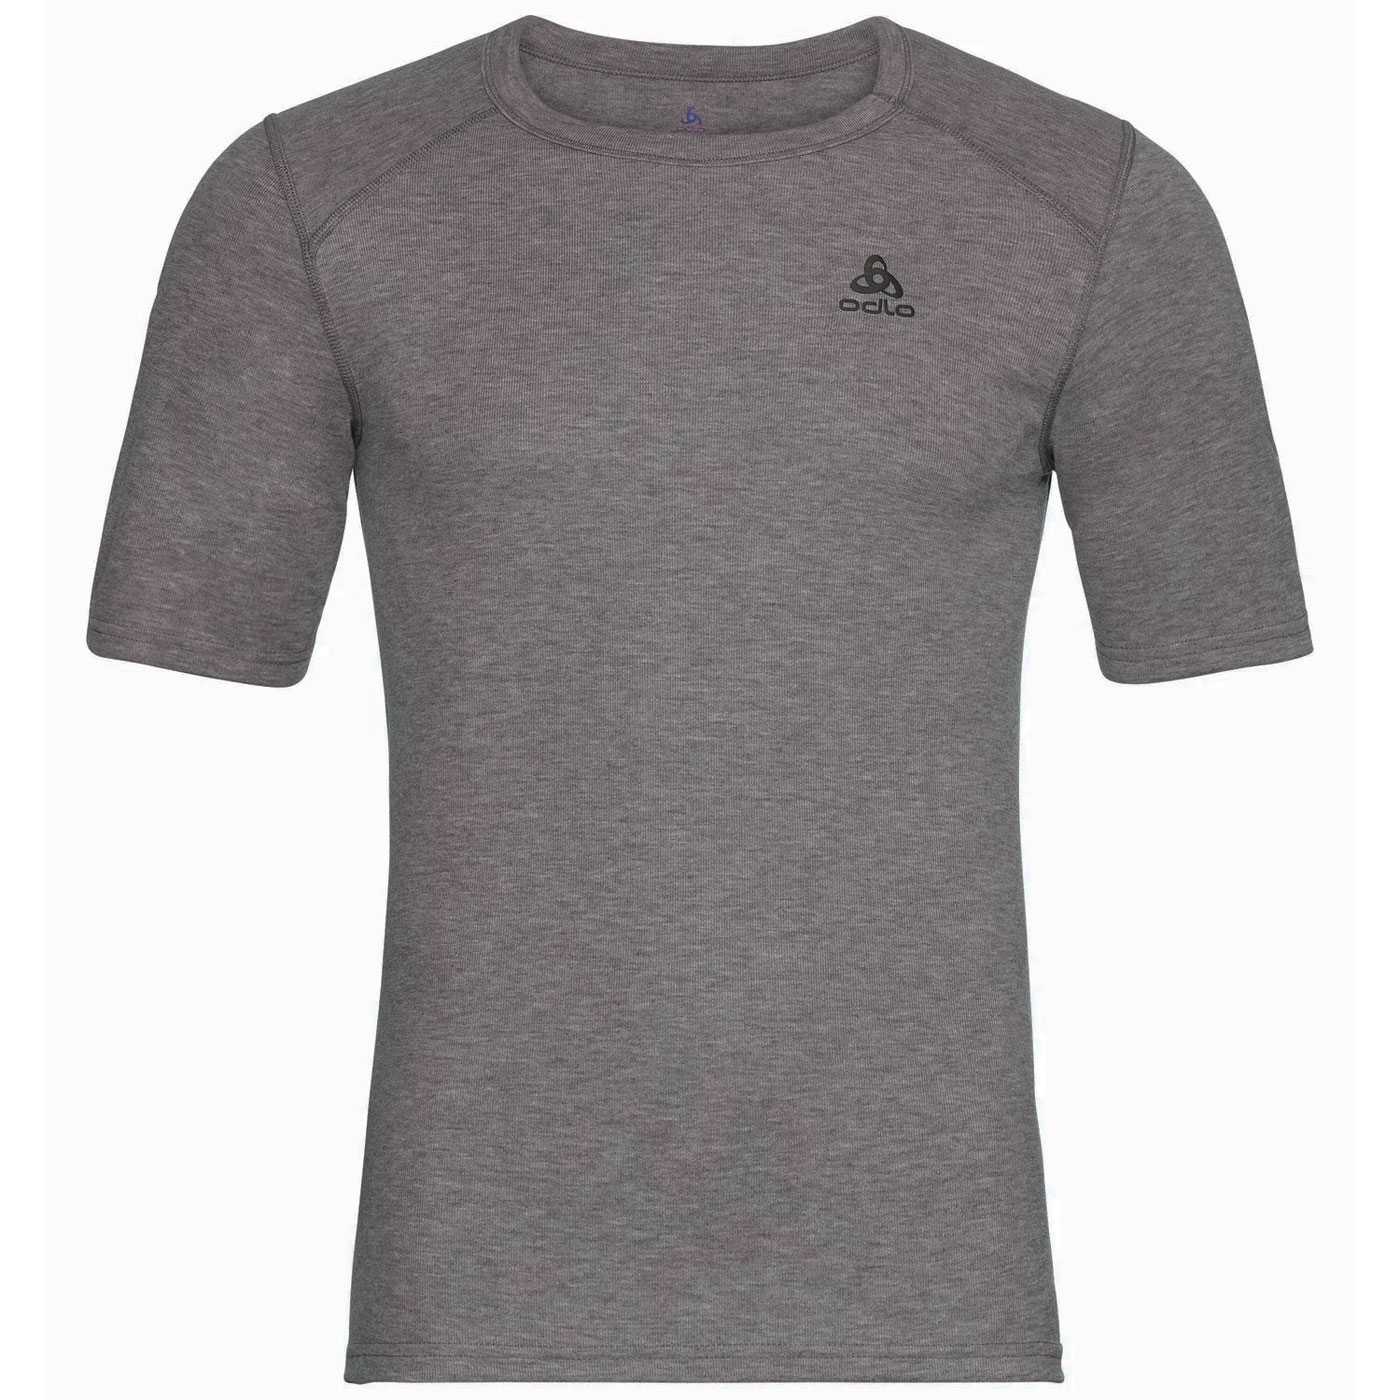 Produktbild von Odlo Herren Active Warm Eco Baselayer T-Shirt - odlo steel grey melange